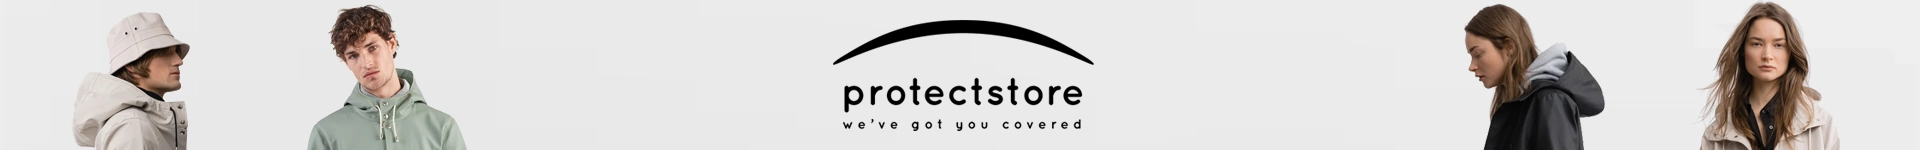 Protectstore.co.uks background